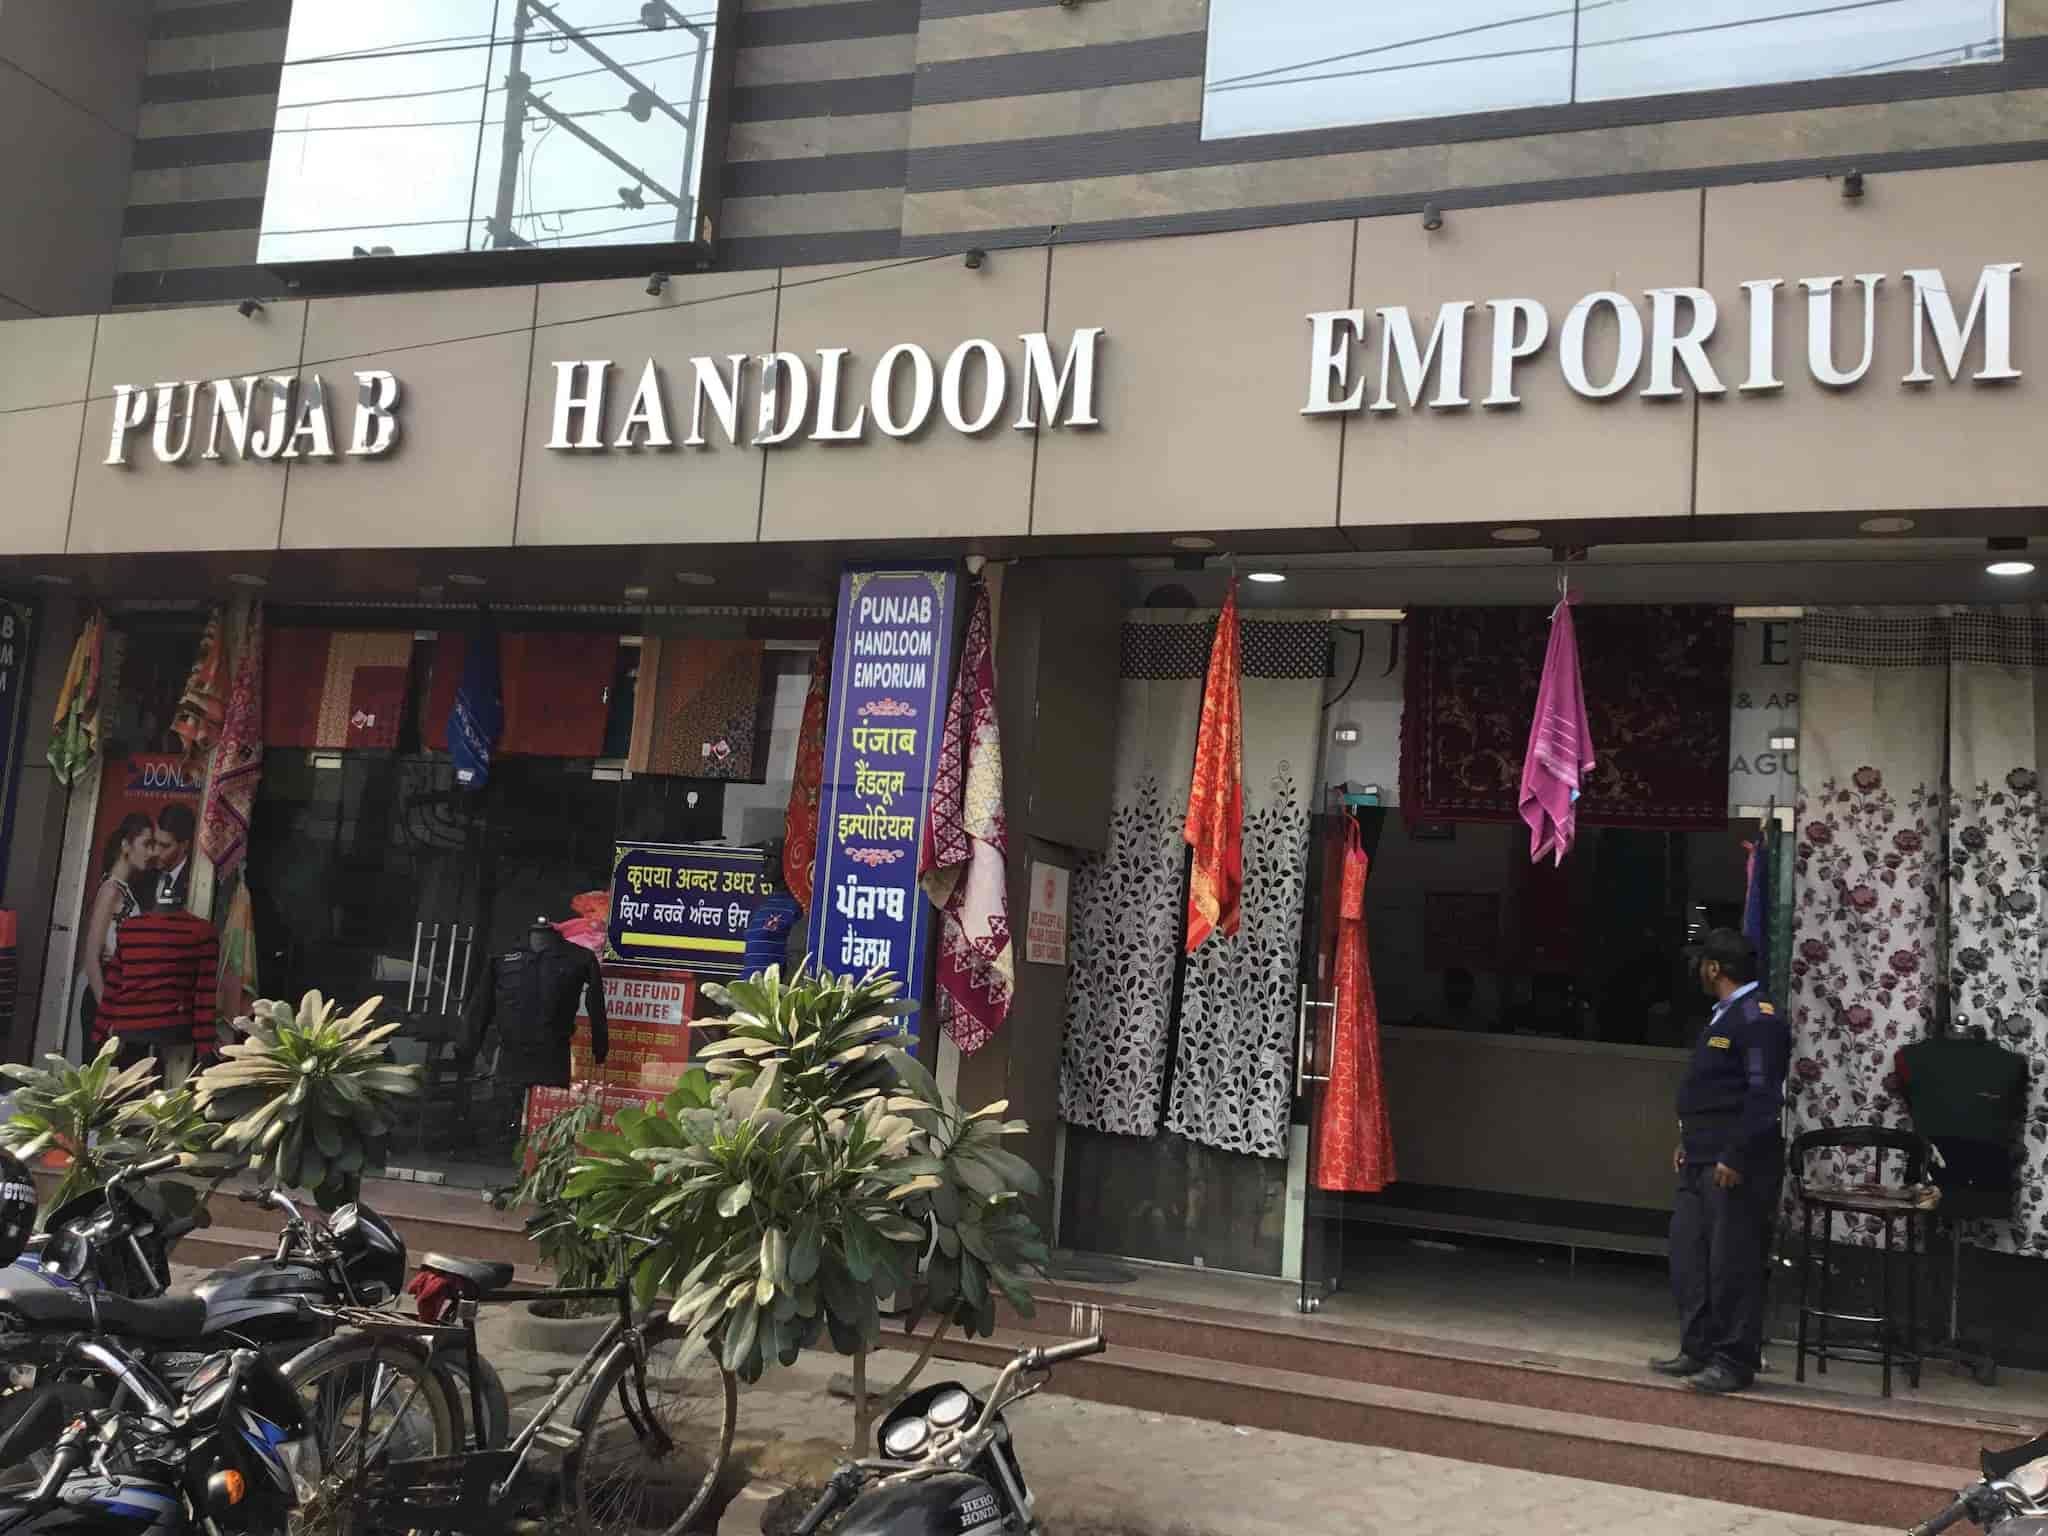 37612punjab-handloom-emporium-gill-road-ludhiana-readymade-garment-retailers-iix89.jpg